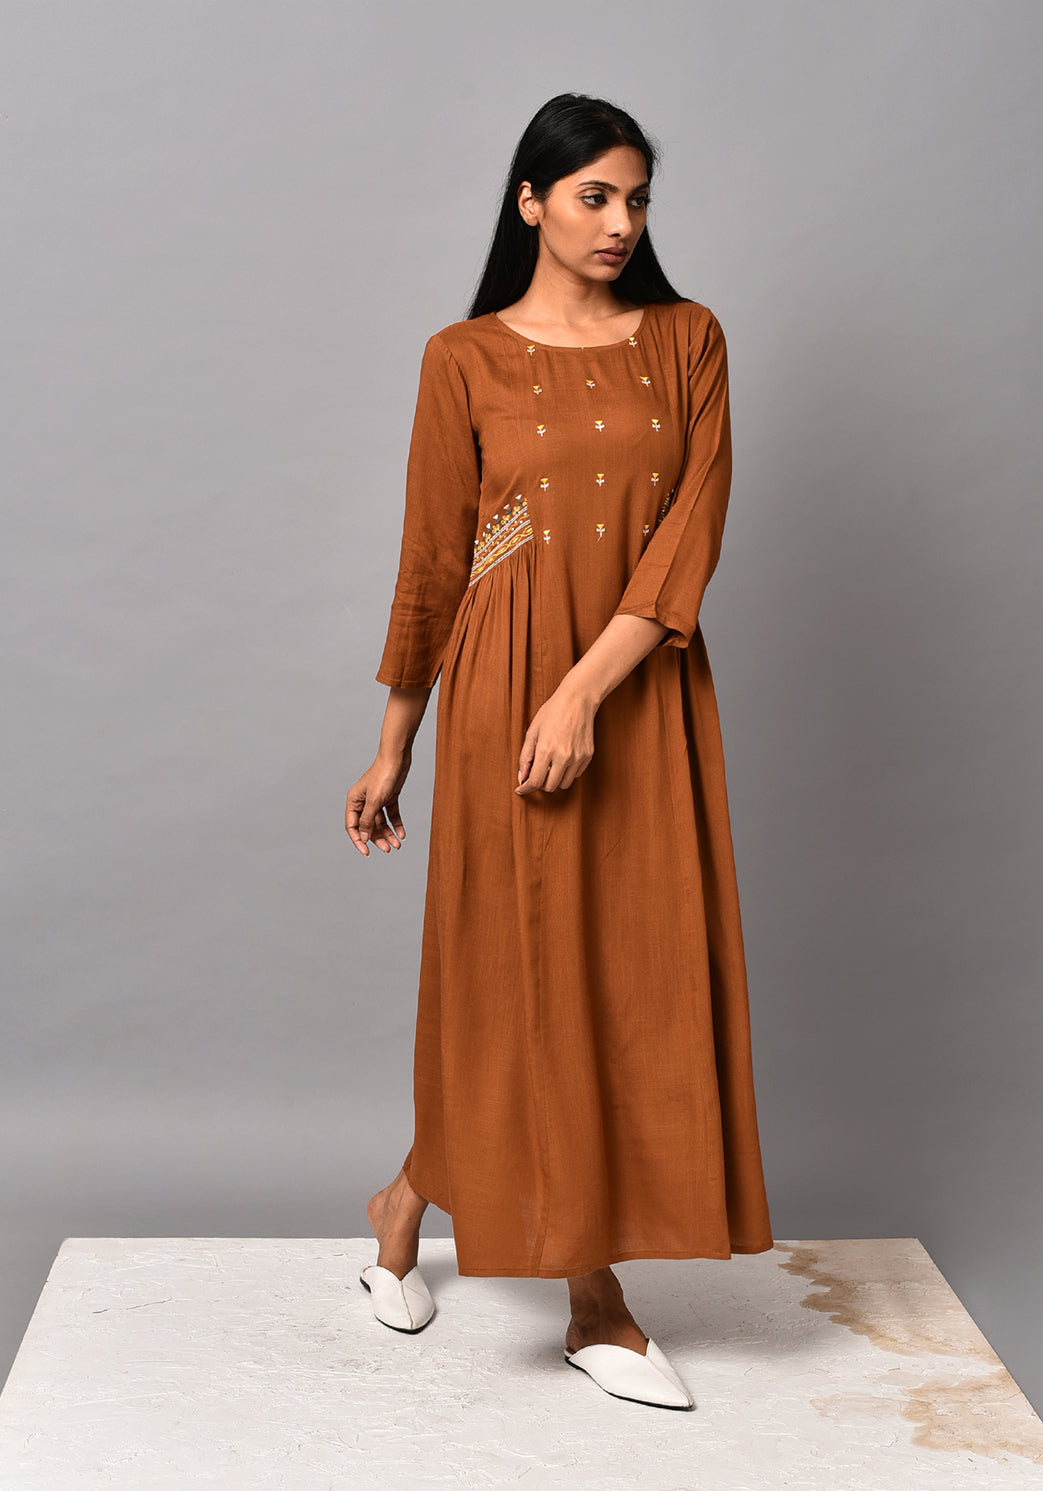 Pilgrim Thanksgiving Women's Size L Brown Long Sleeve Dress With Bonnet |  eBay